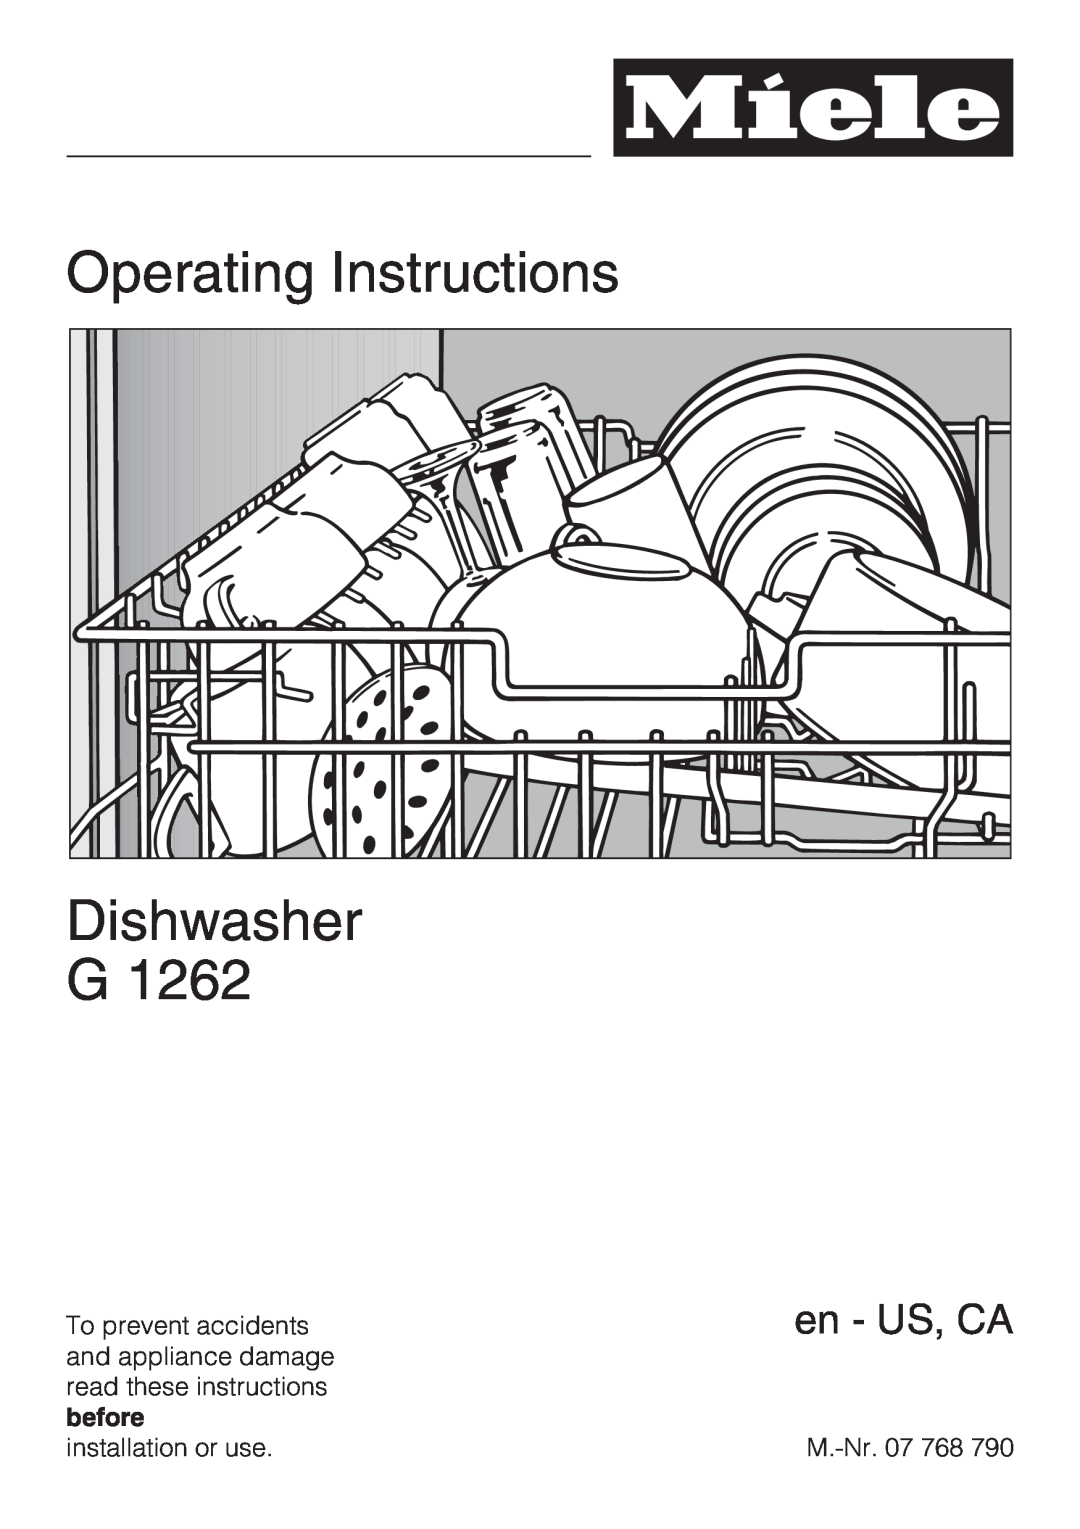 Miele G 1262 manual Operating Instructions, Dishwasher, en - US, CA 